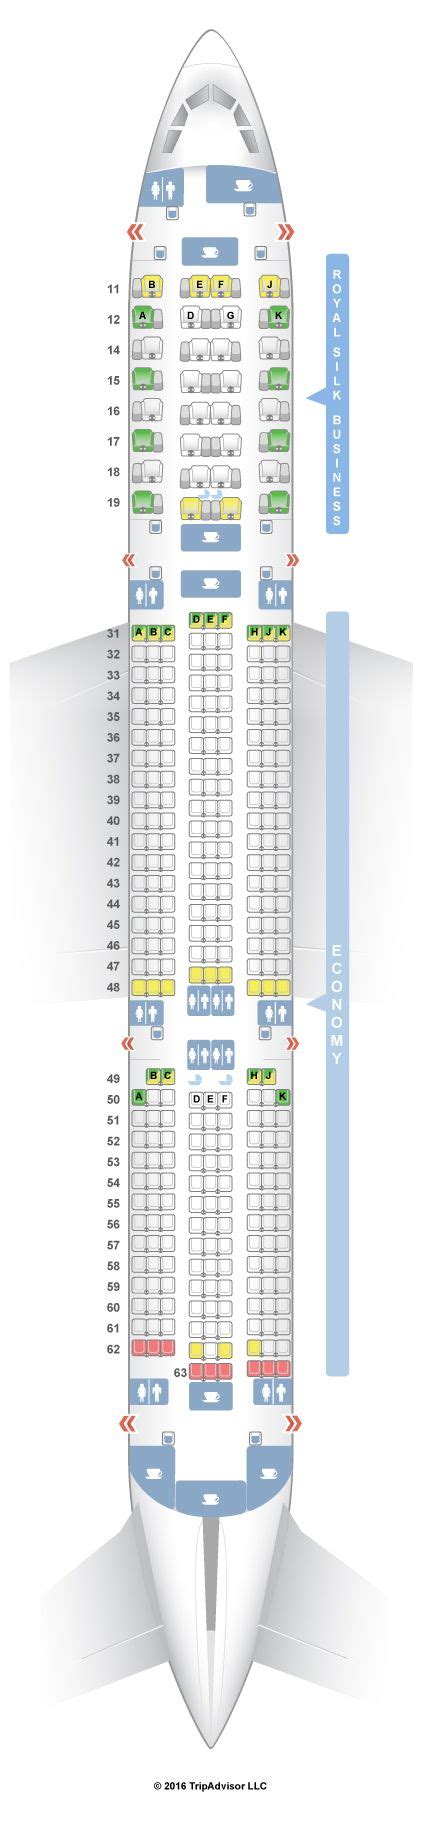 Seatguru Seat Map Finnair Airbus A350 900 350 Seatguru Map Zohal